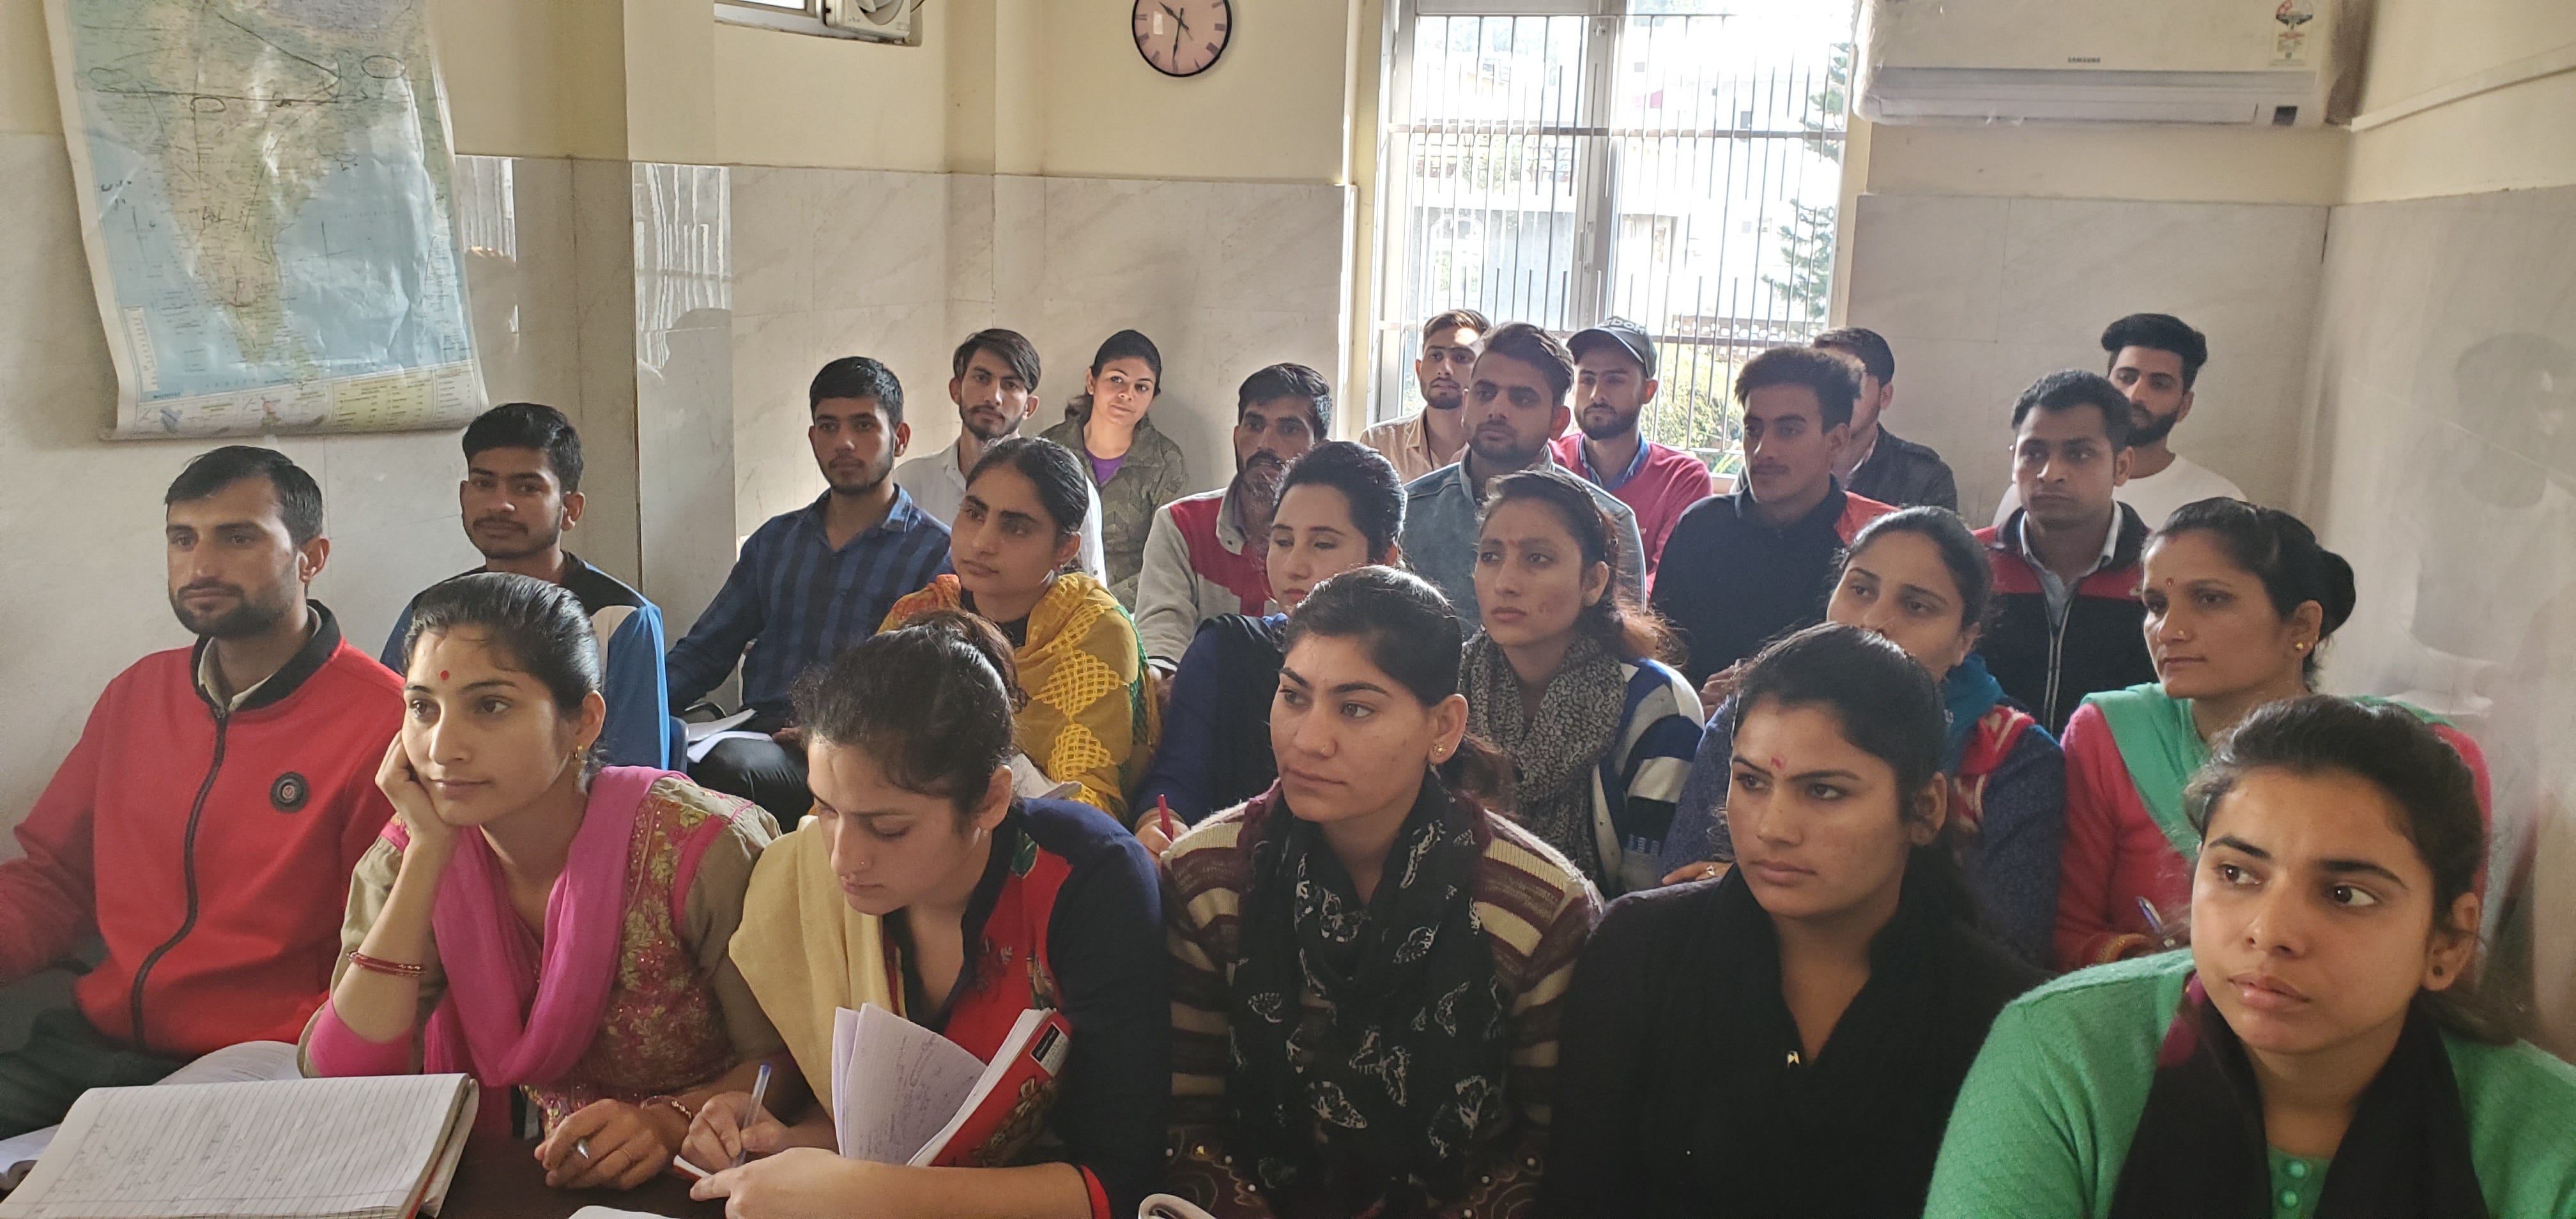 CDS Written exam coaching in progress at our Jammu Branch